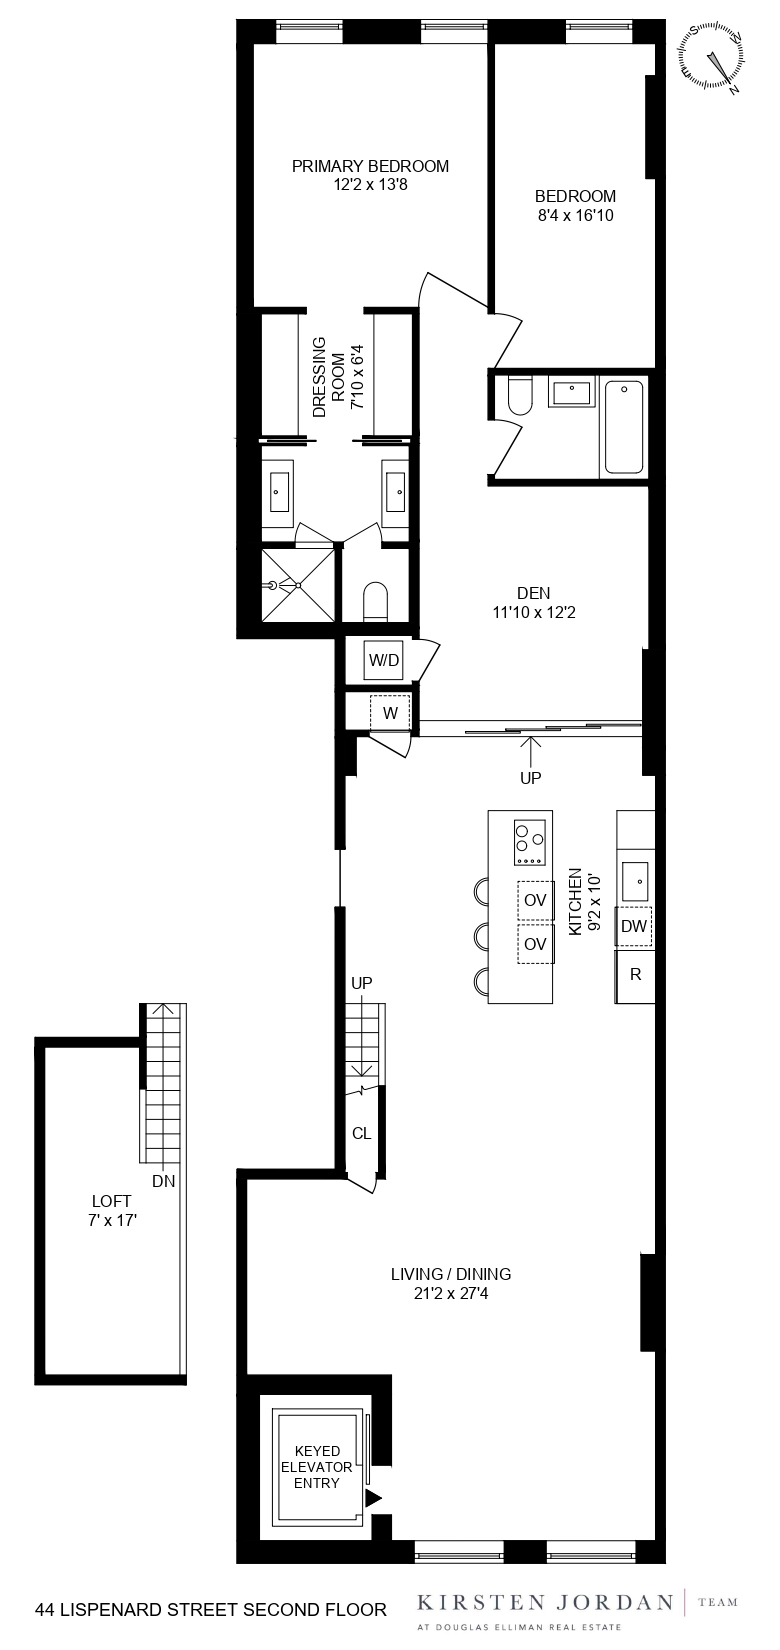 Floorplan for 44 Lispenard Street, 2